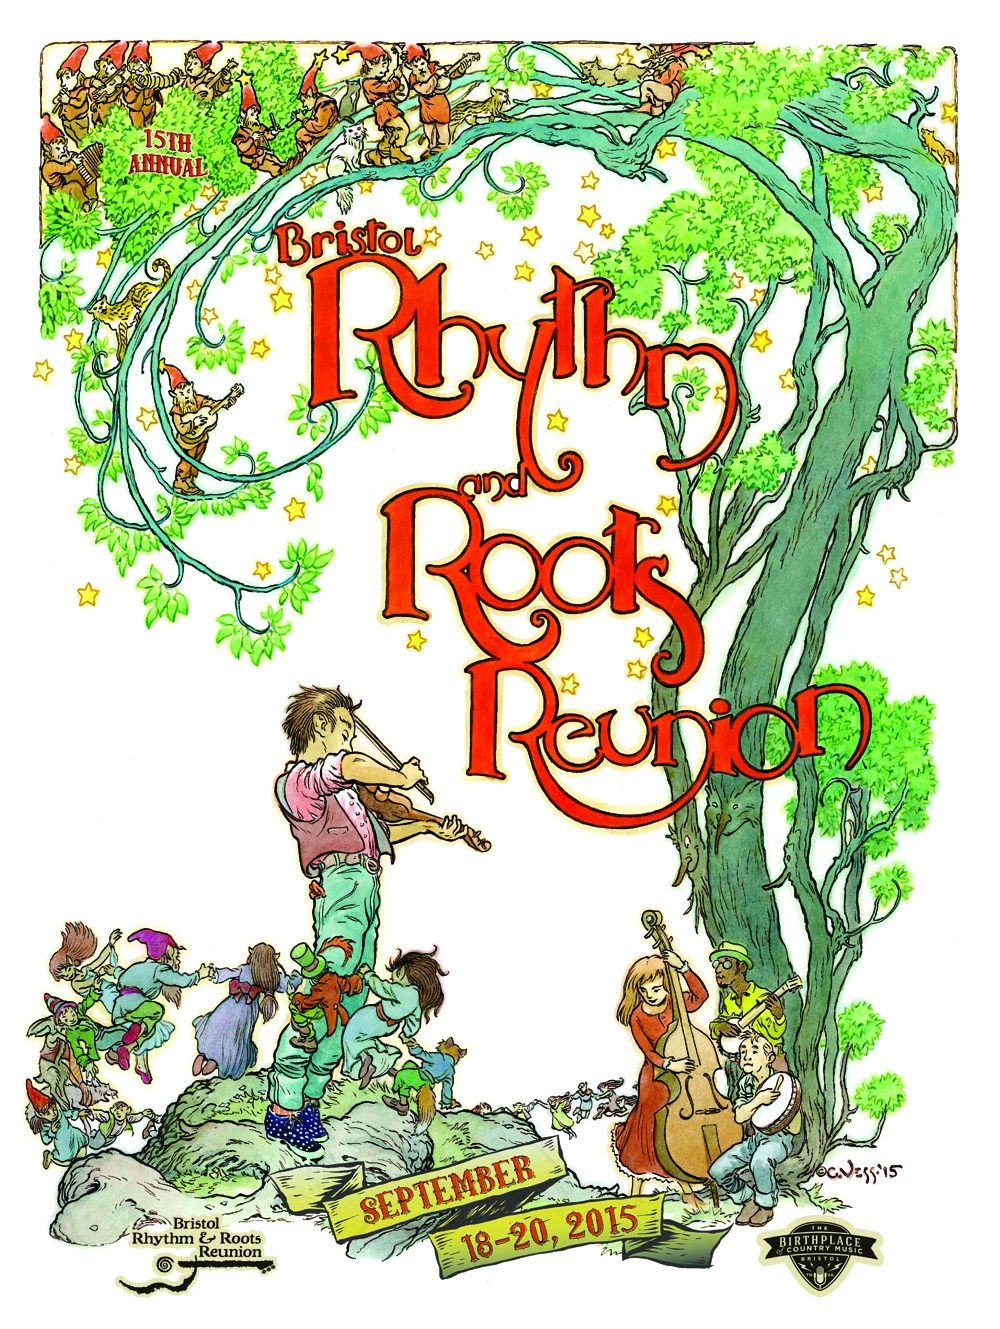 Bristol Rhythm & Roots Reunion 2015 Lineup Announced